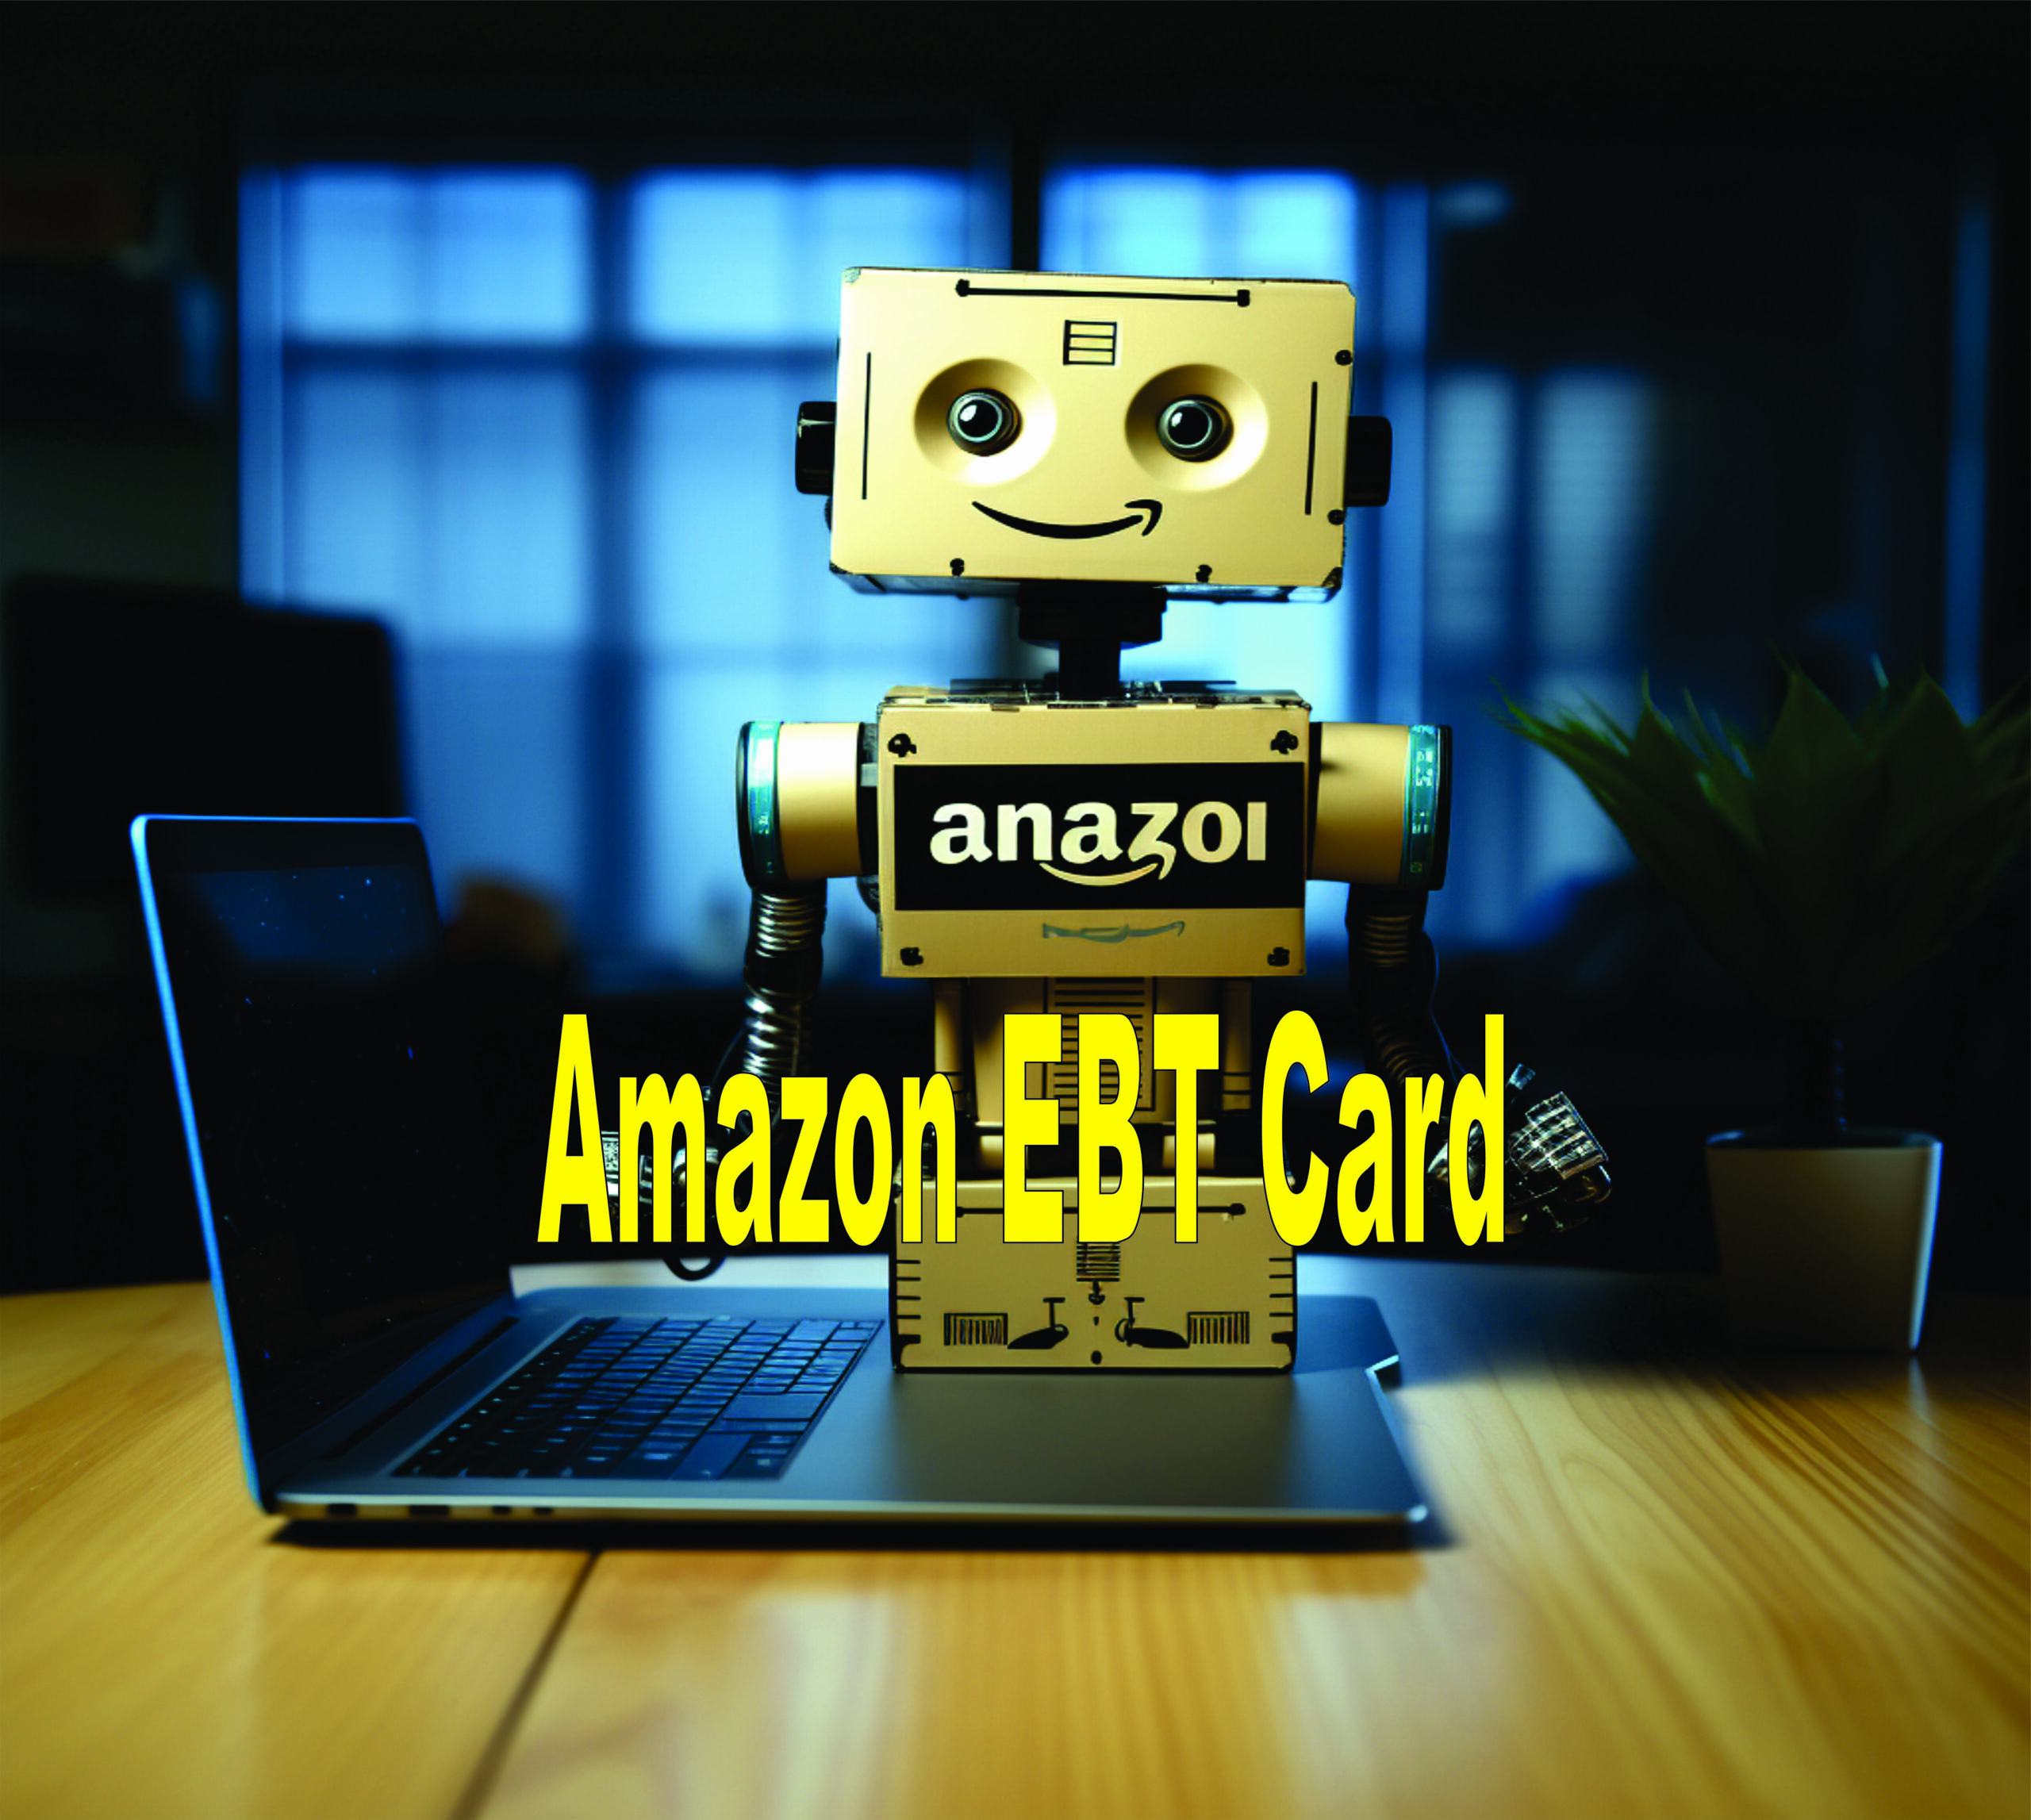 Amazon Ebt Card